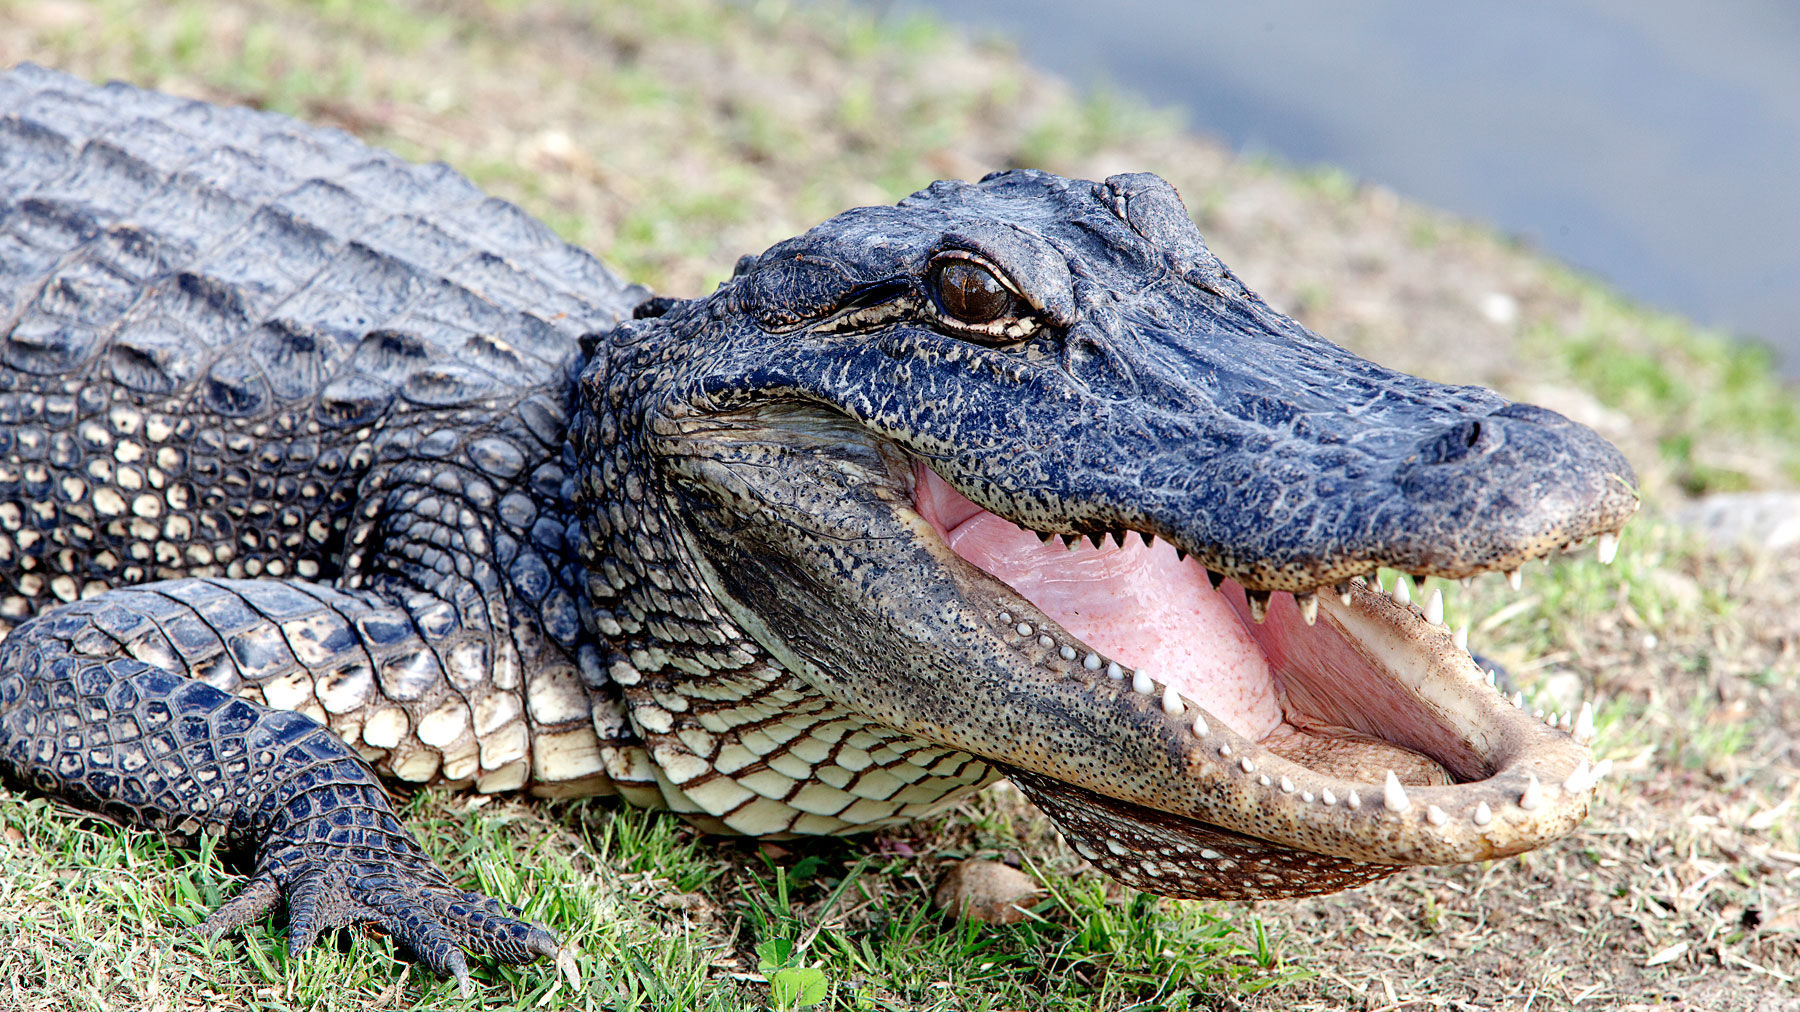 Escort Alligator: Revolutionizing the Escort Service Industry